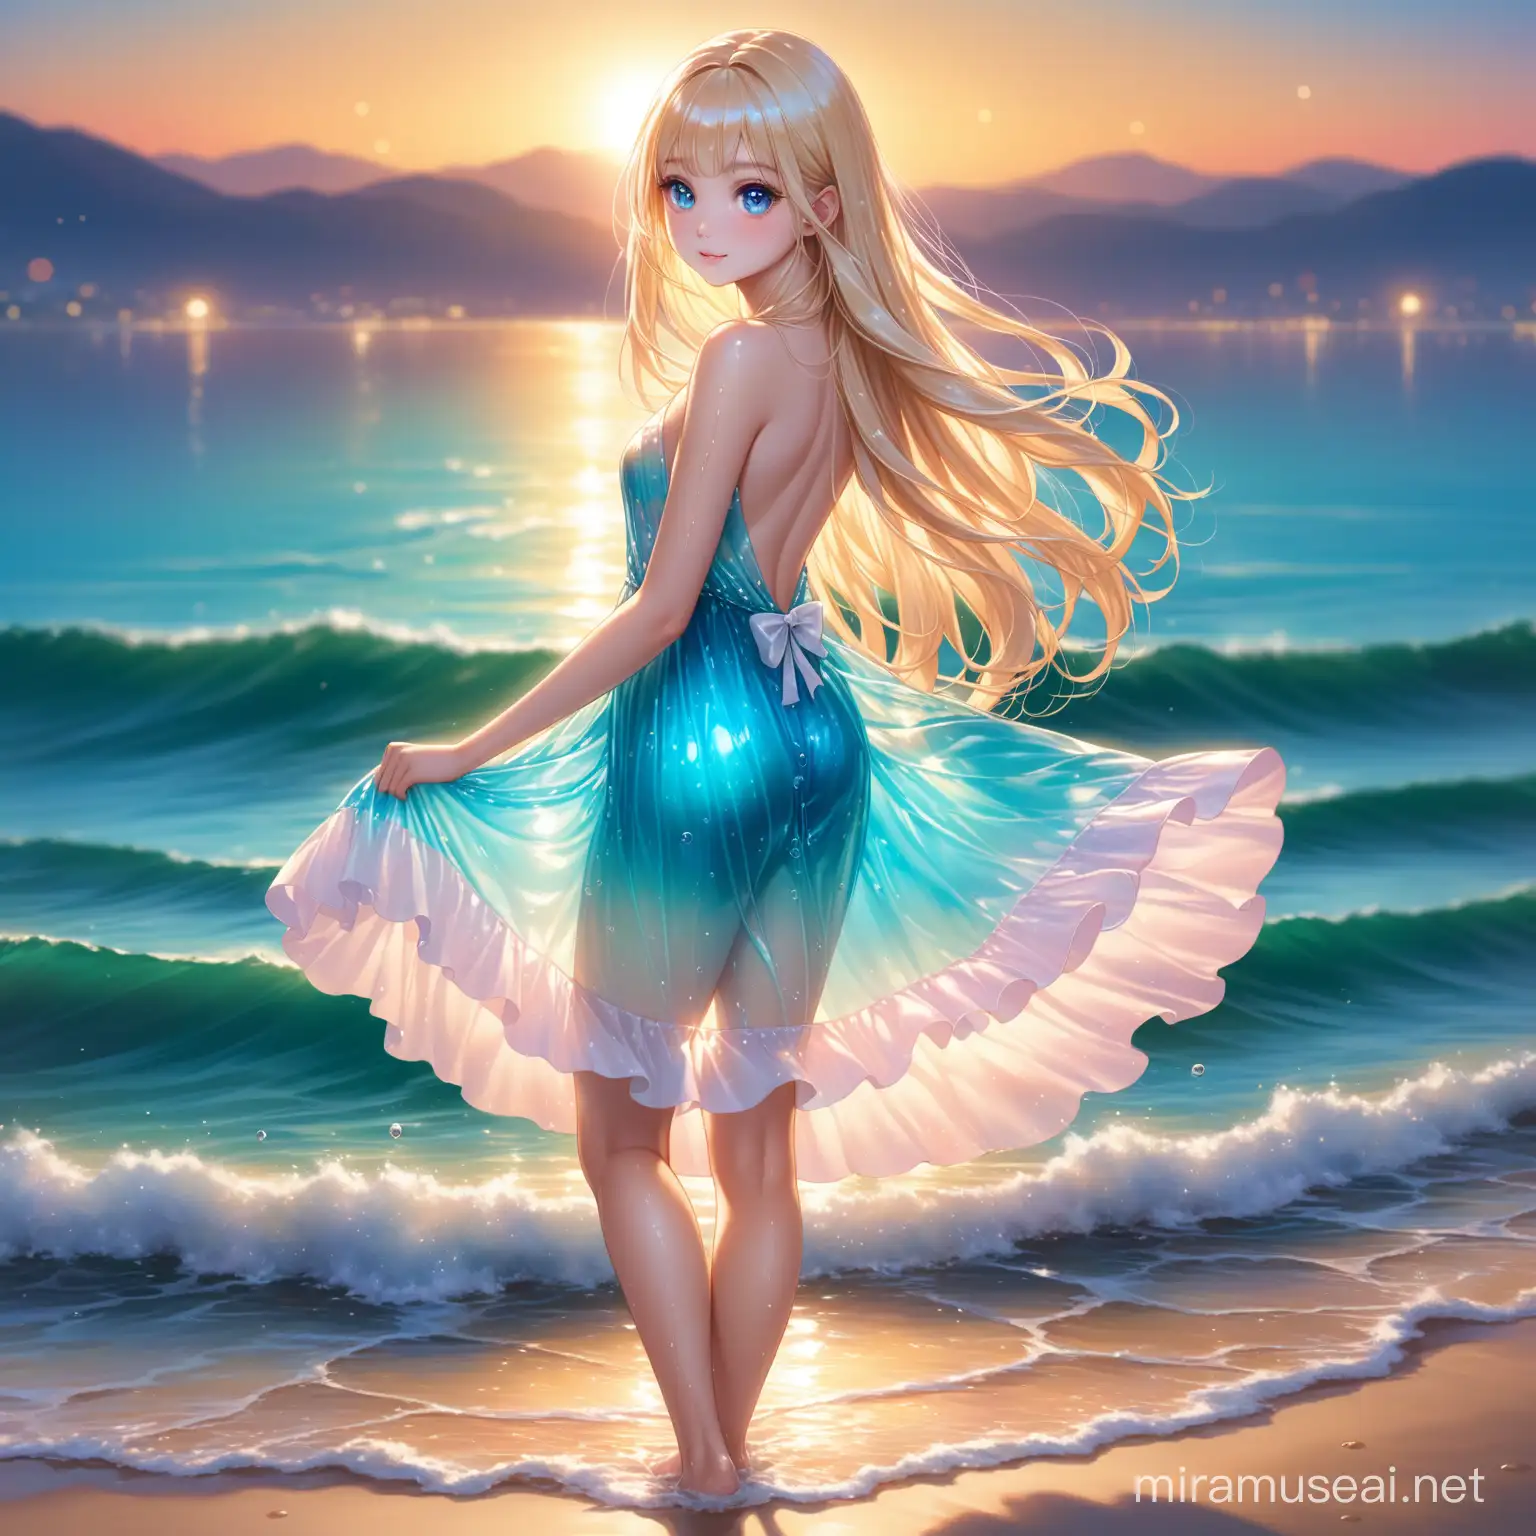 Graceful Blonde Jellyfish Girl Admiring Sunset on Shore